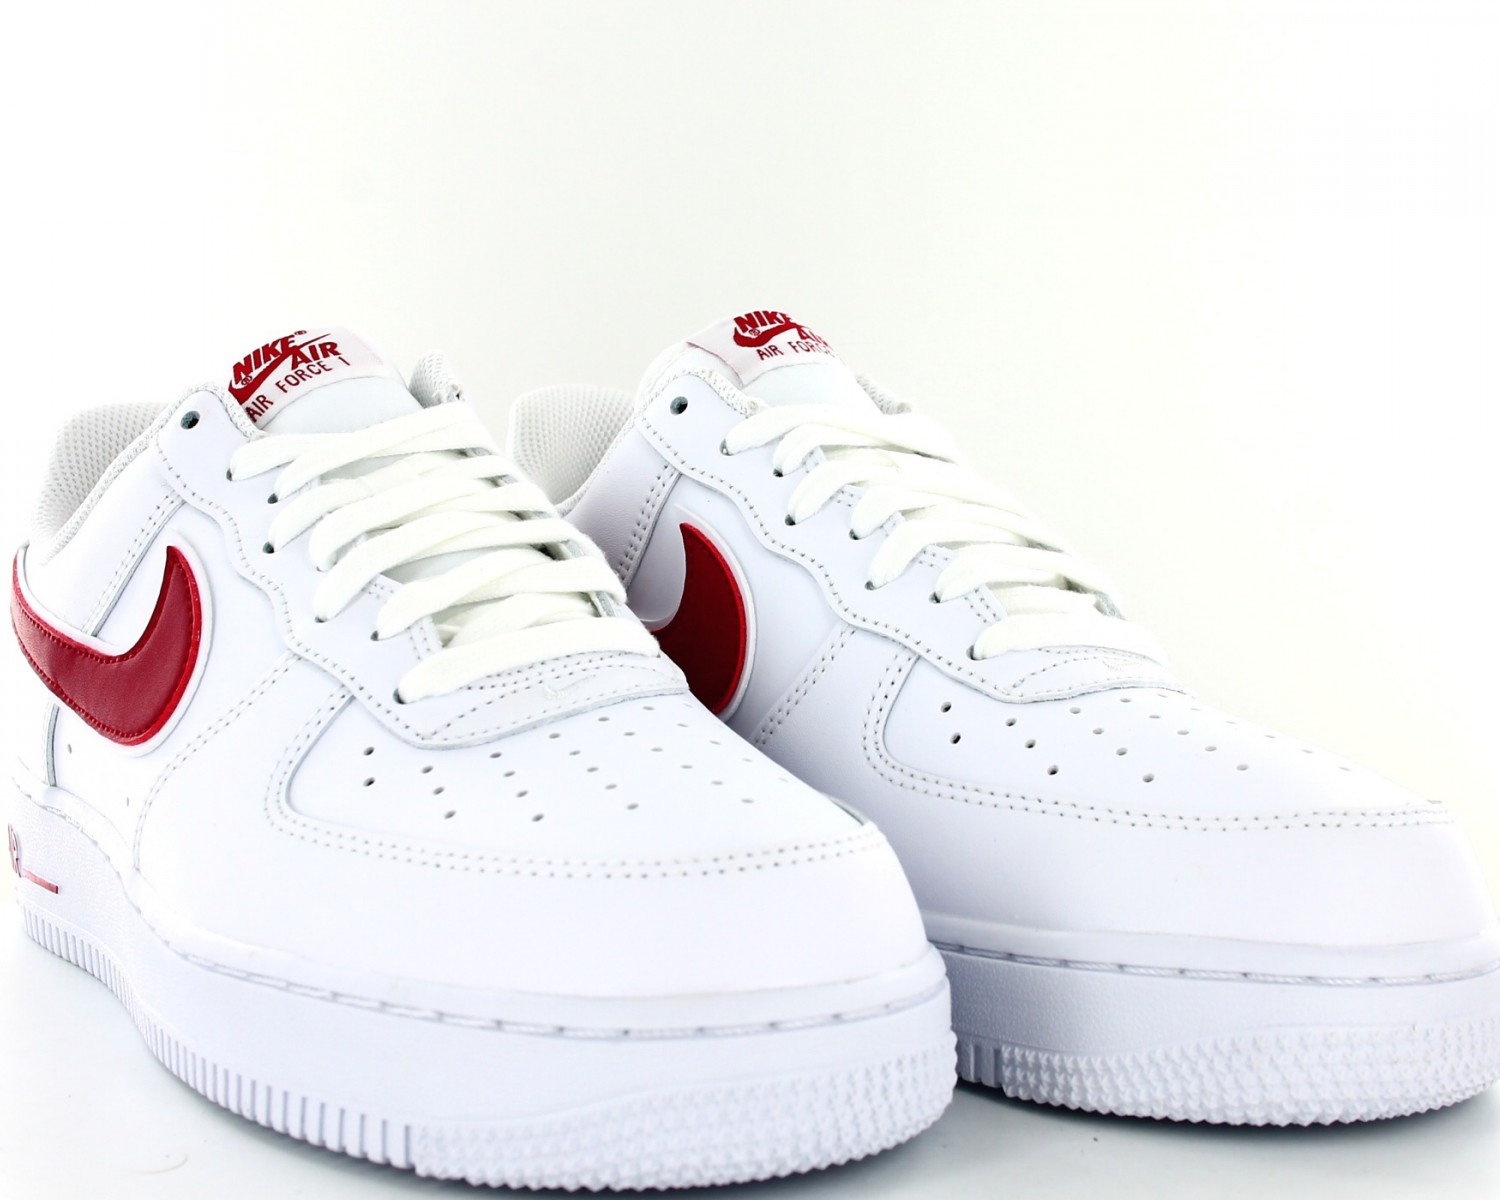 Nike Air force 1 '07 3 Blanc rouge